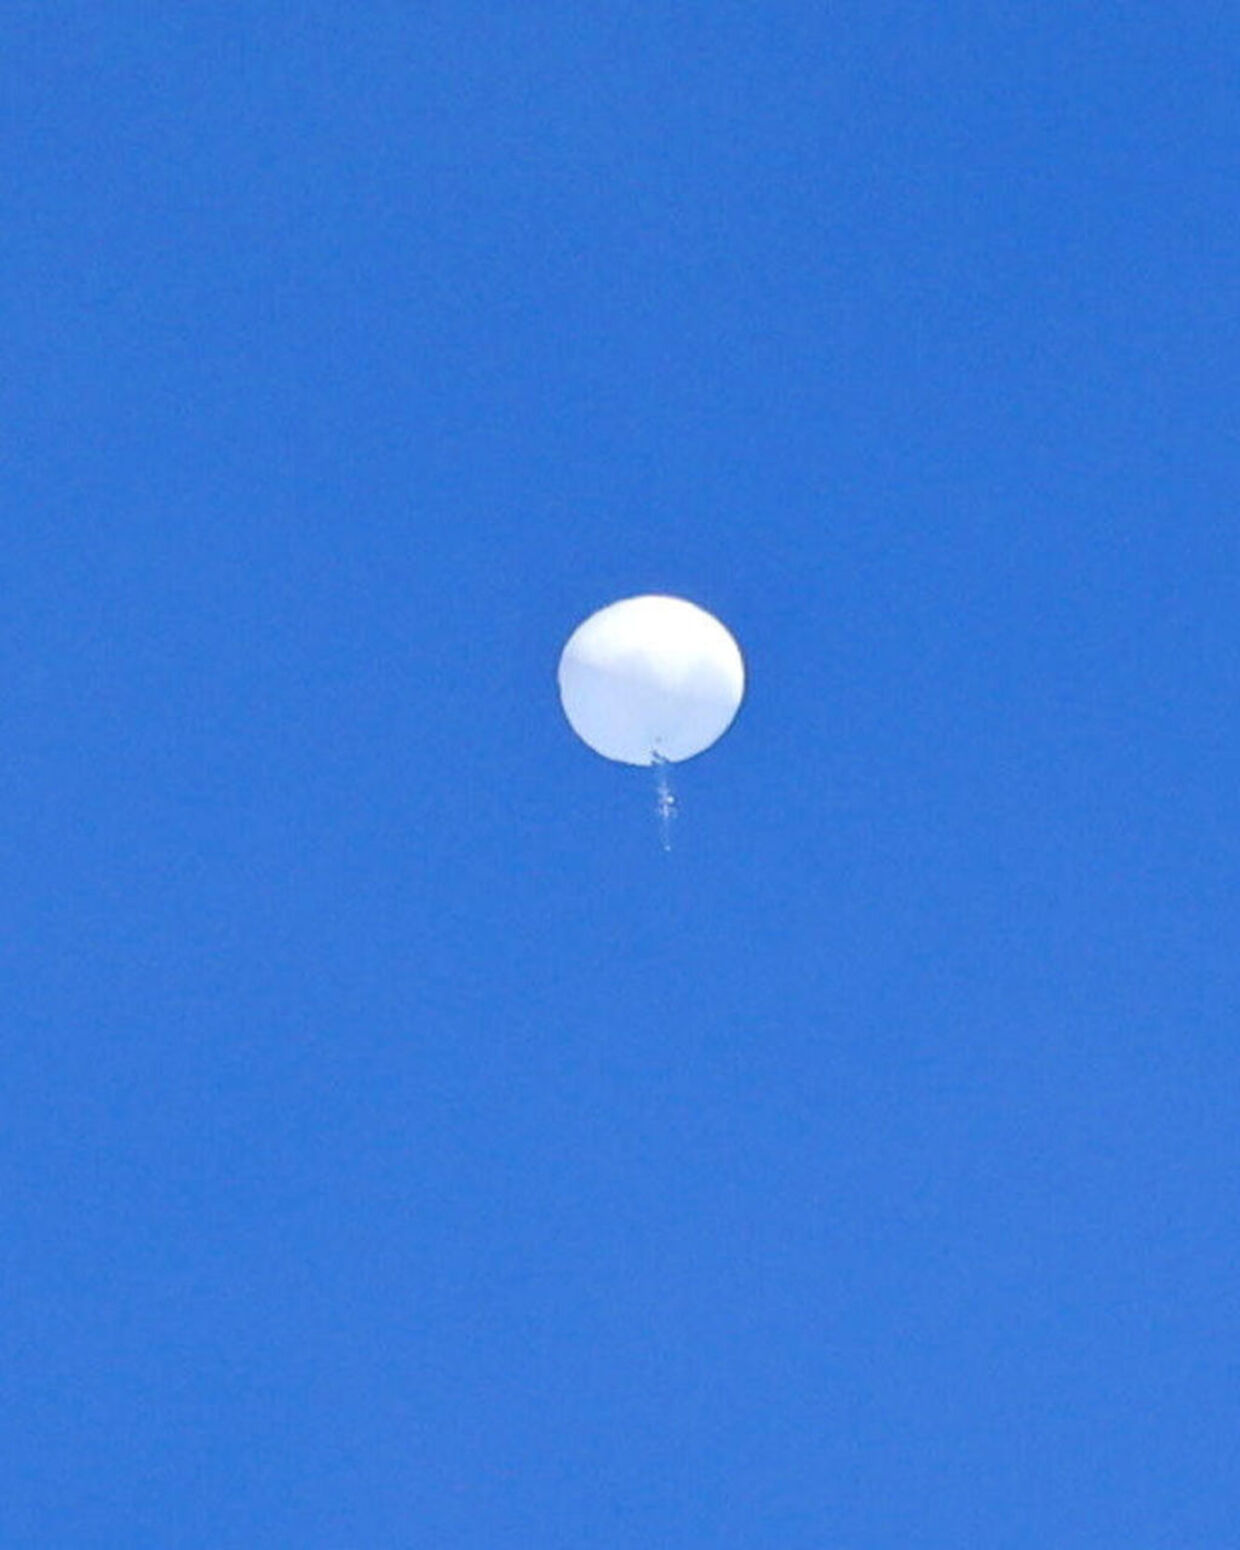 Sådan så det ud, da den kinesiske ballon hang på himlen over USA.